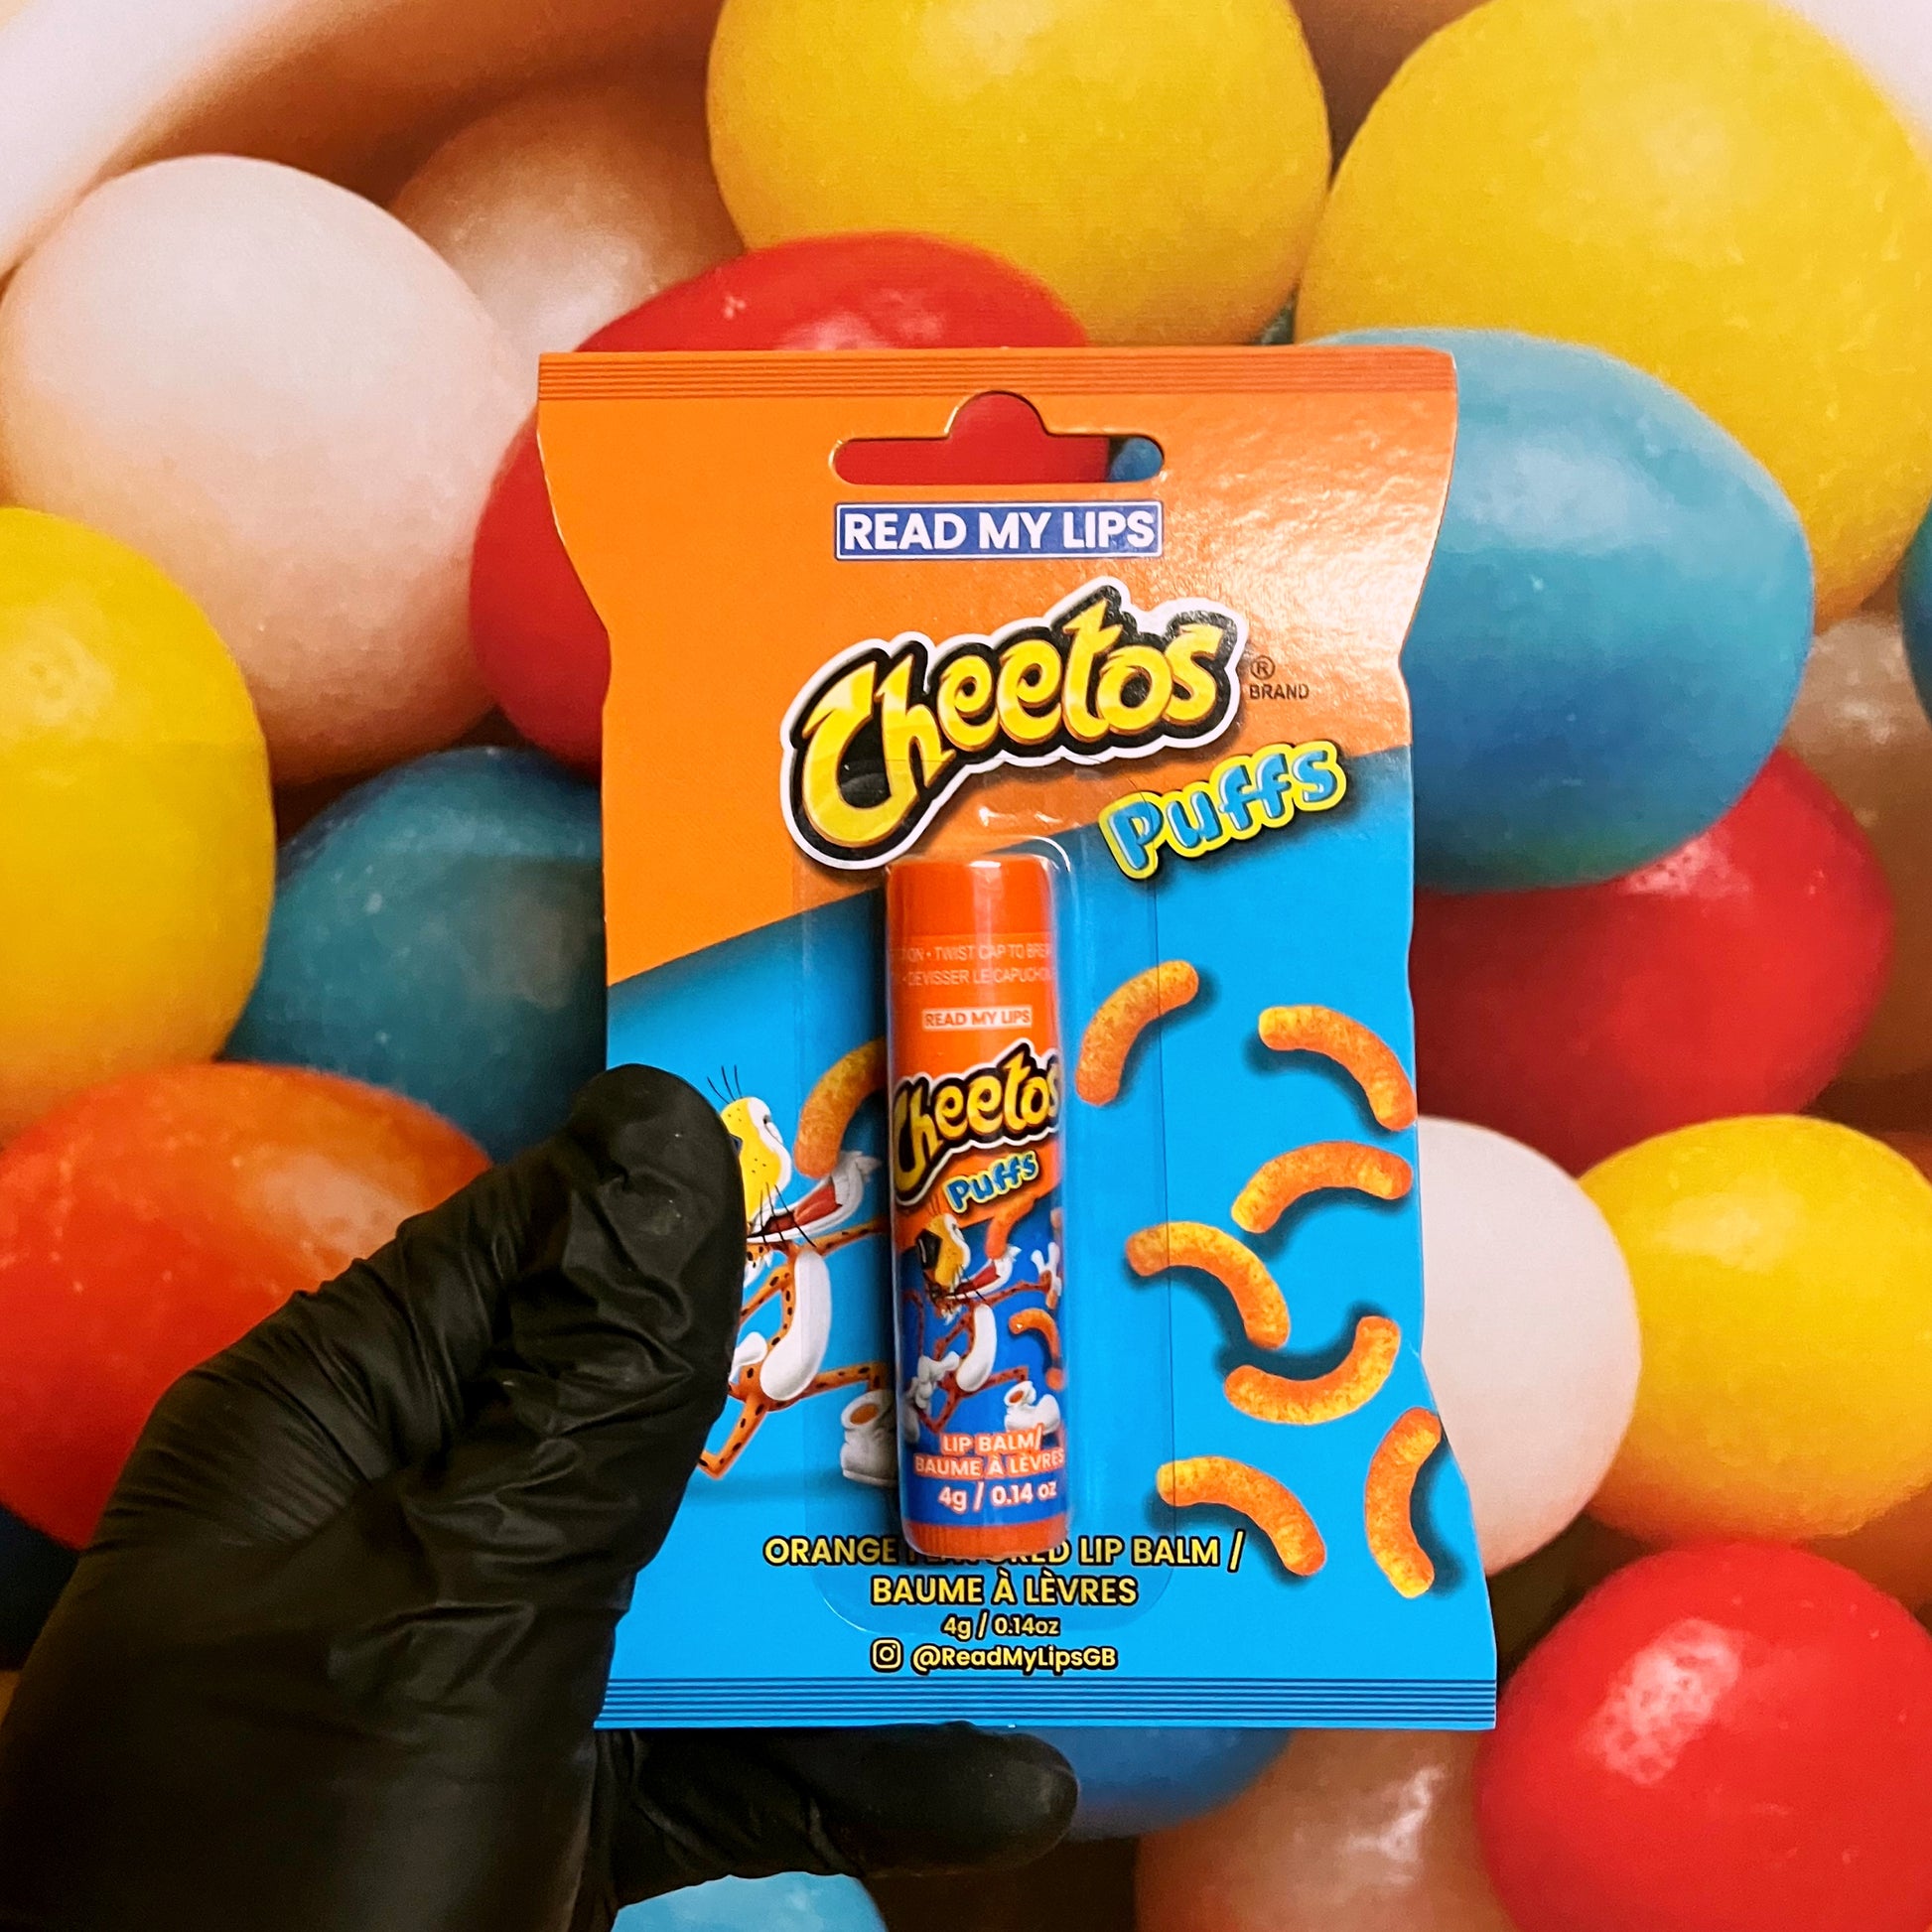 Cheetos Puffs Lip Balm 4g Hershey